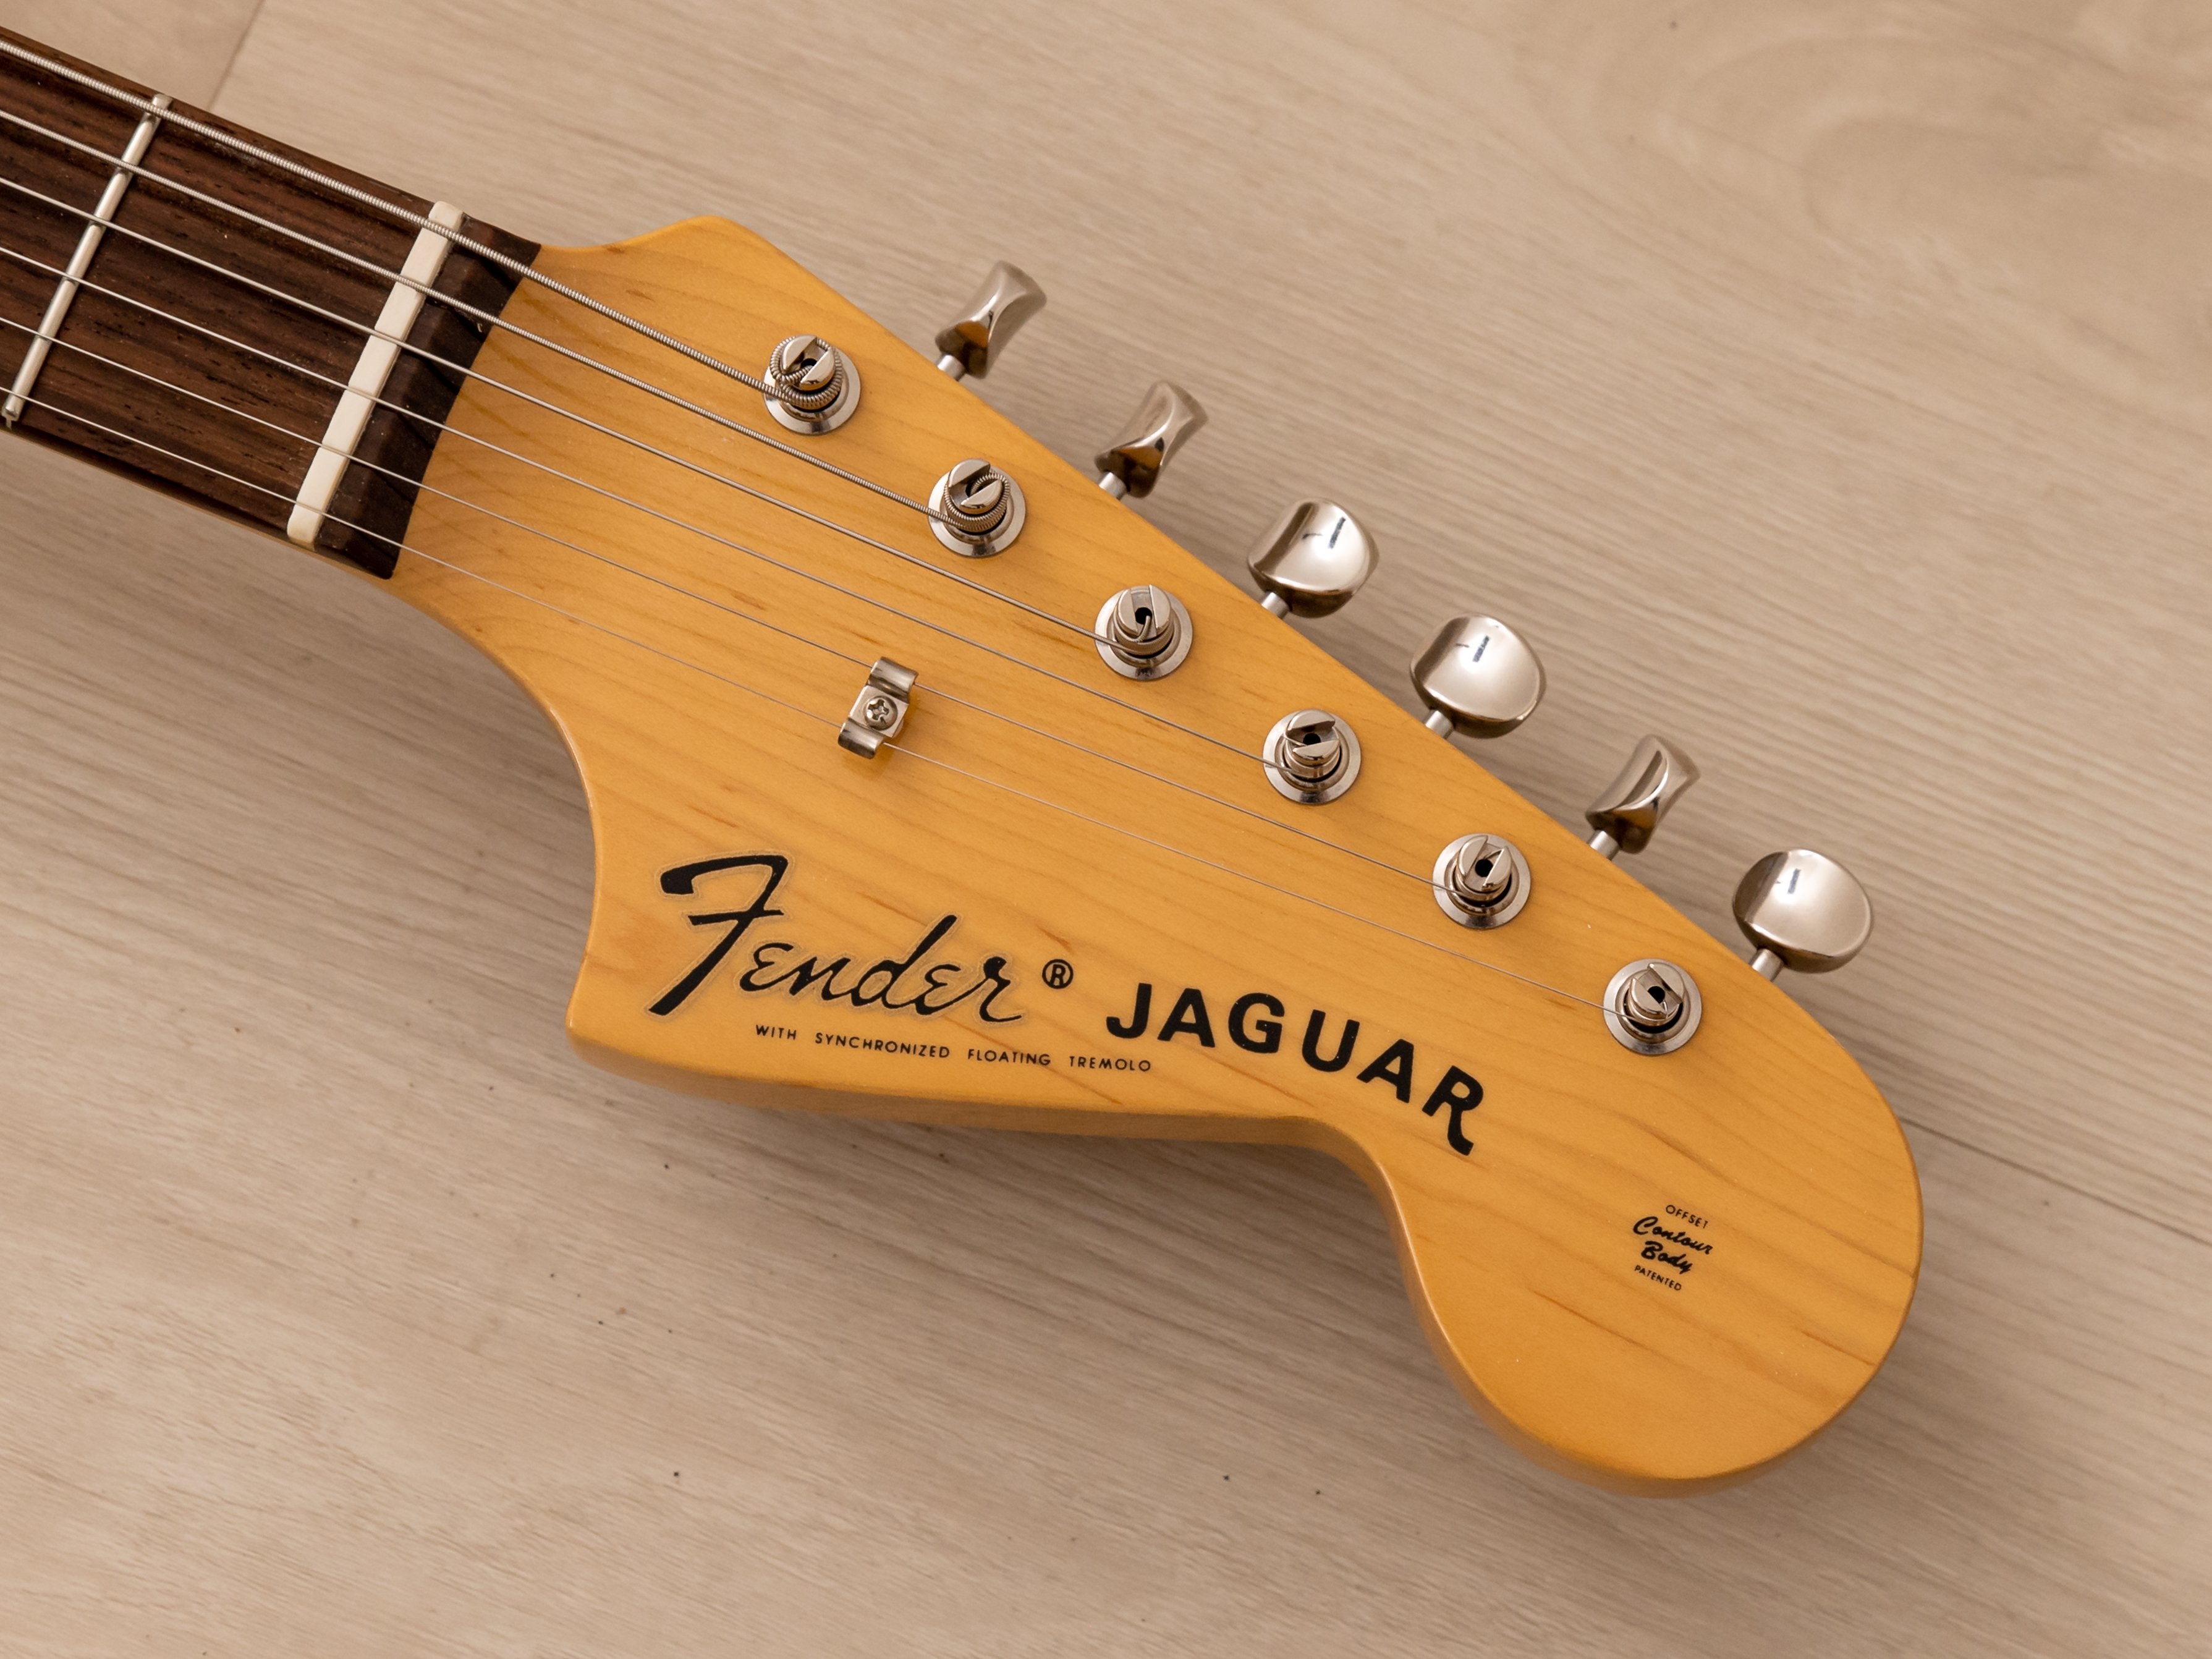 2004 Fender Jaguar Limited Edition Antigua JG66 Offset Guitar Near-Mint w/ G&G Case, Japan CIJ